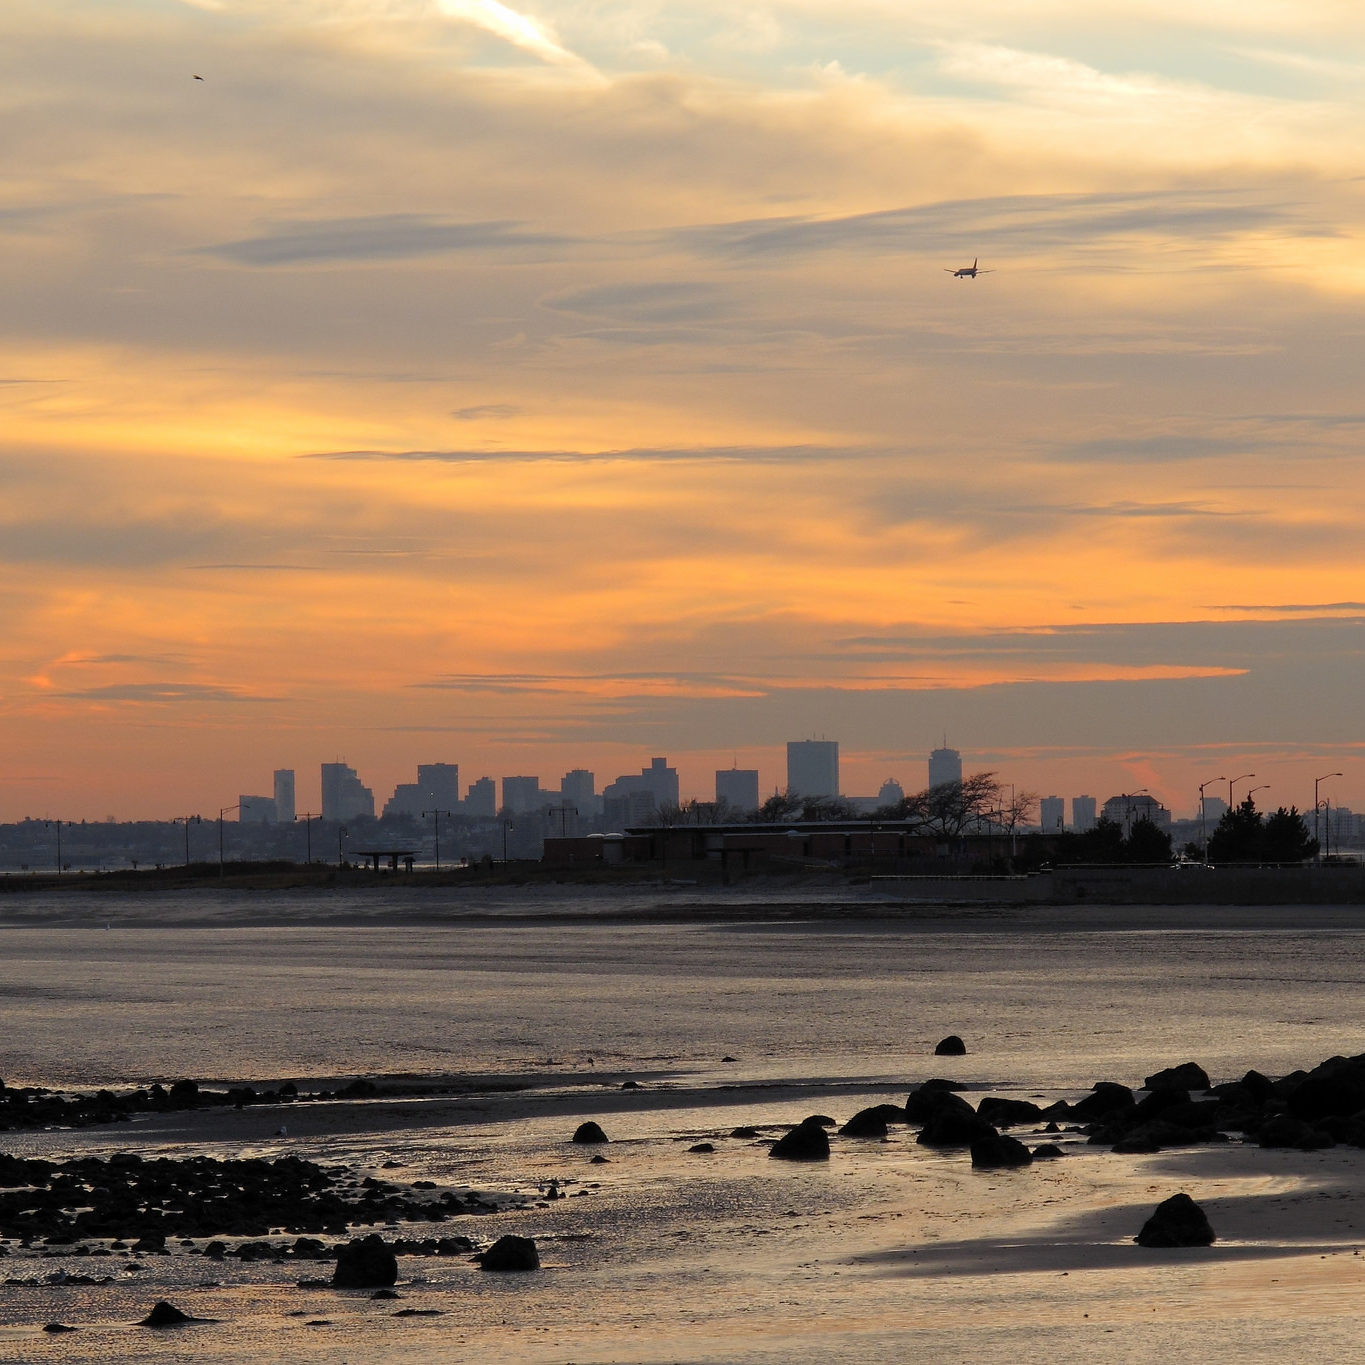 Sunset over Boston - Mr. TinDC